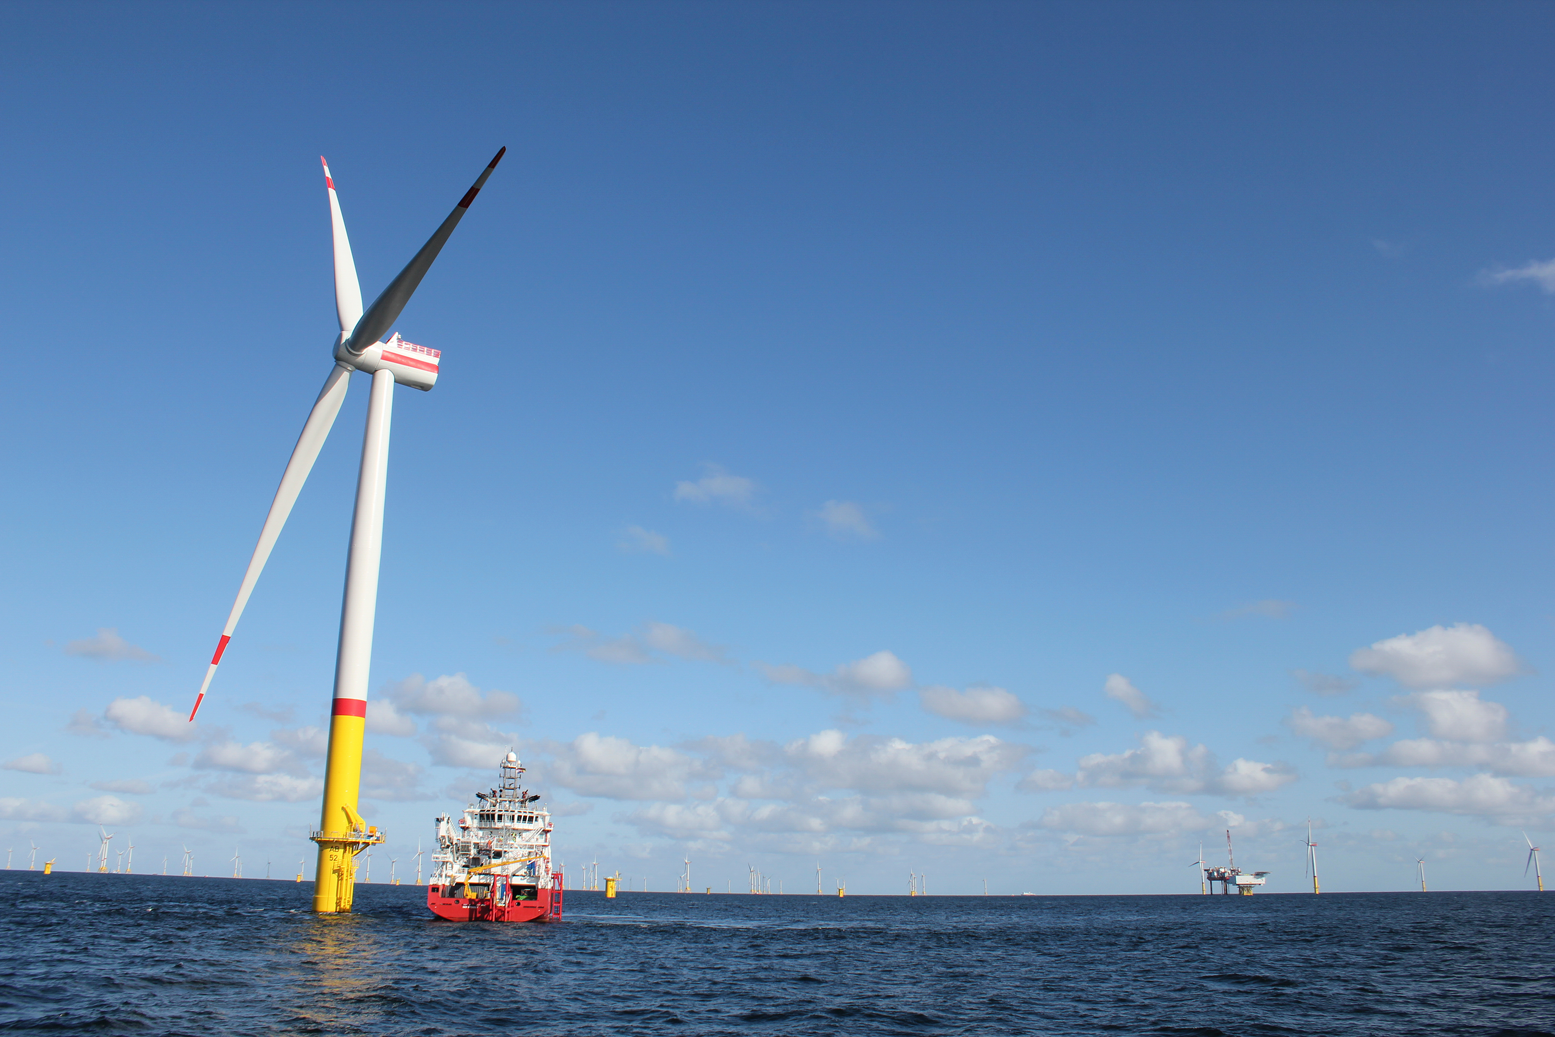 HV for Wind Services Borkum Gode and 1 2 Riffgrund 1 & &